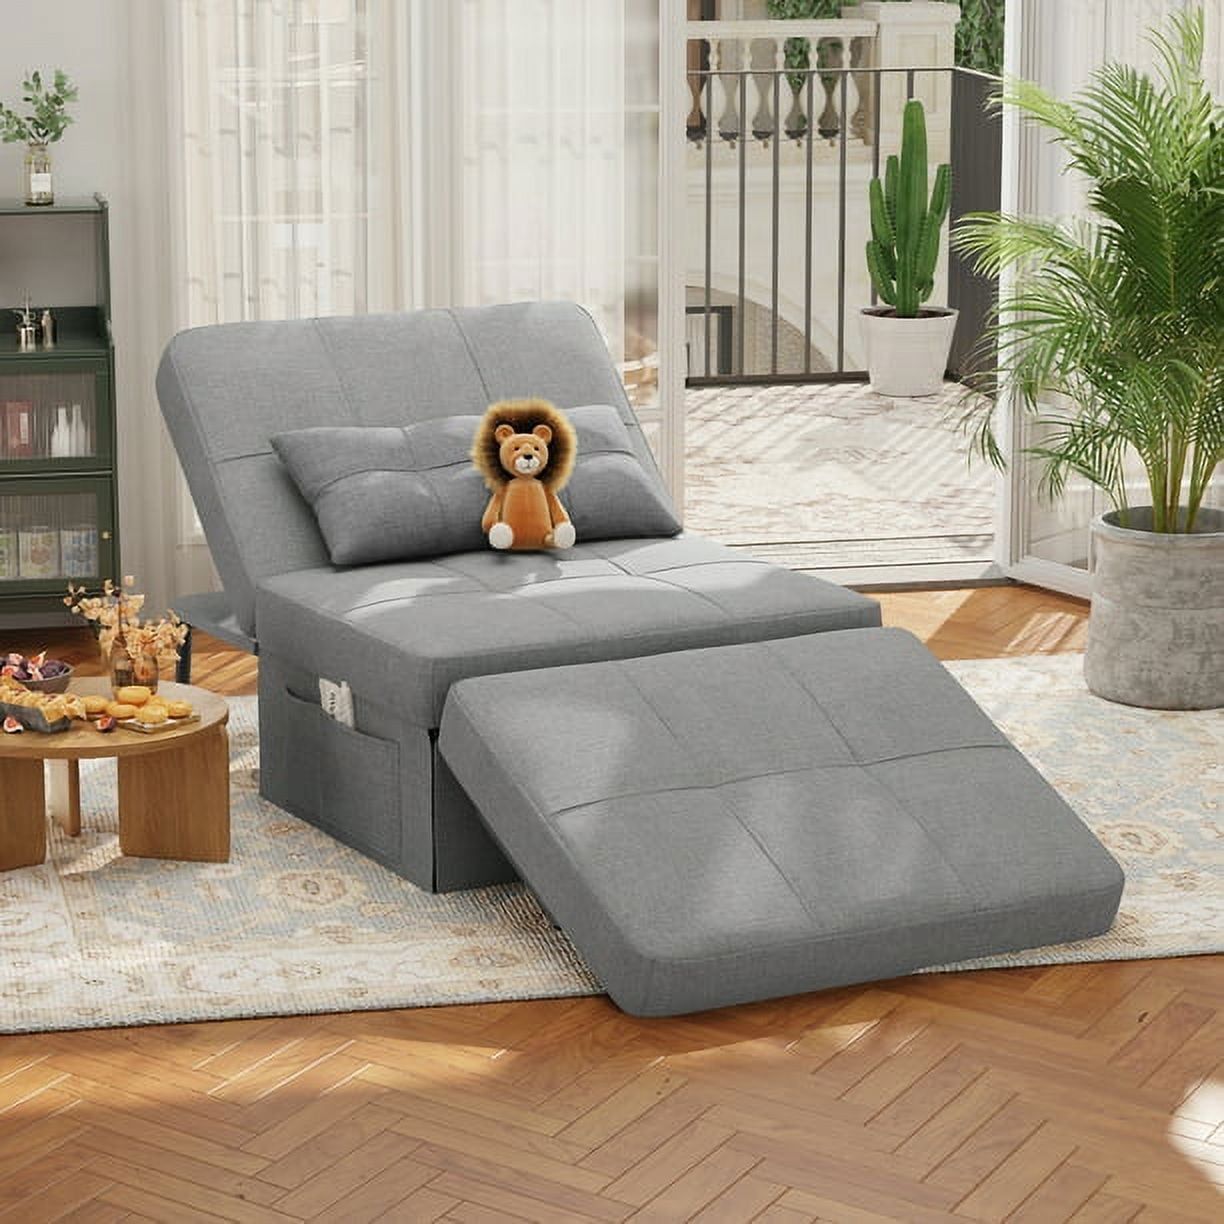 Chair Bed, Lofka Convertible Recliner Single Sofa Bed, Free Installation,  730 Lbs, Light Gray – Walmart In Convertible Light Gray Chair Beds (Photo 1 of 15)